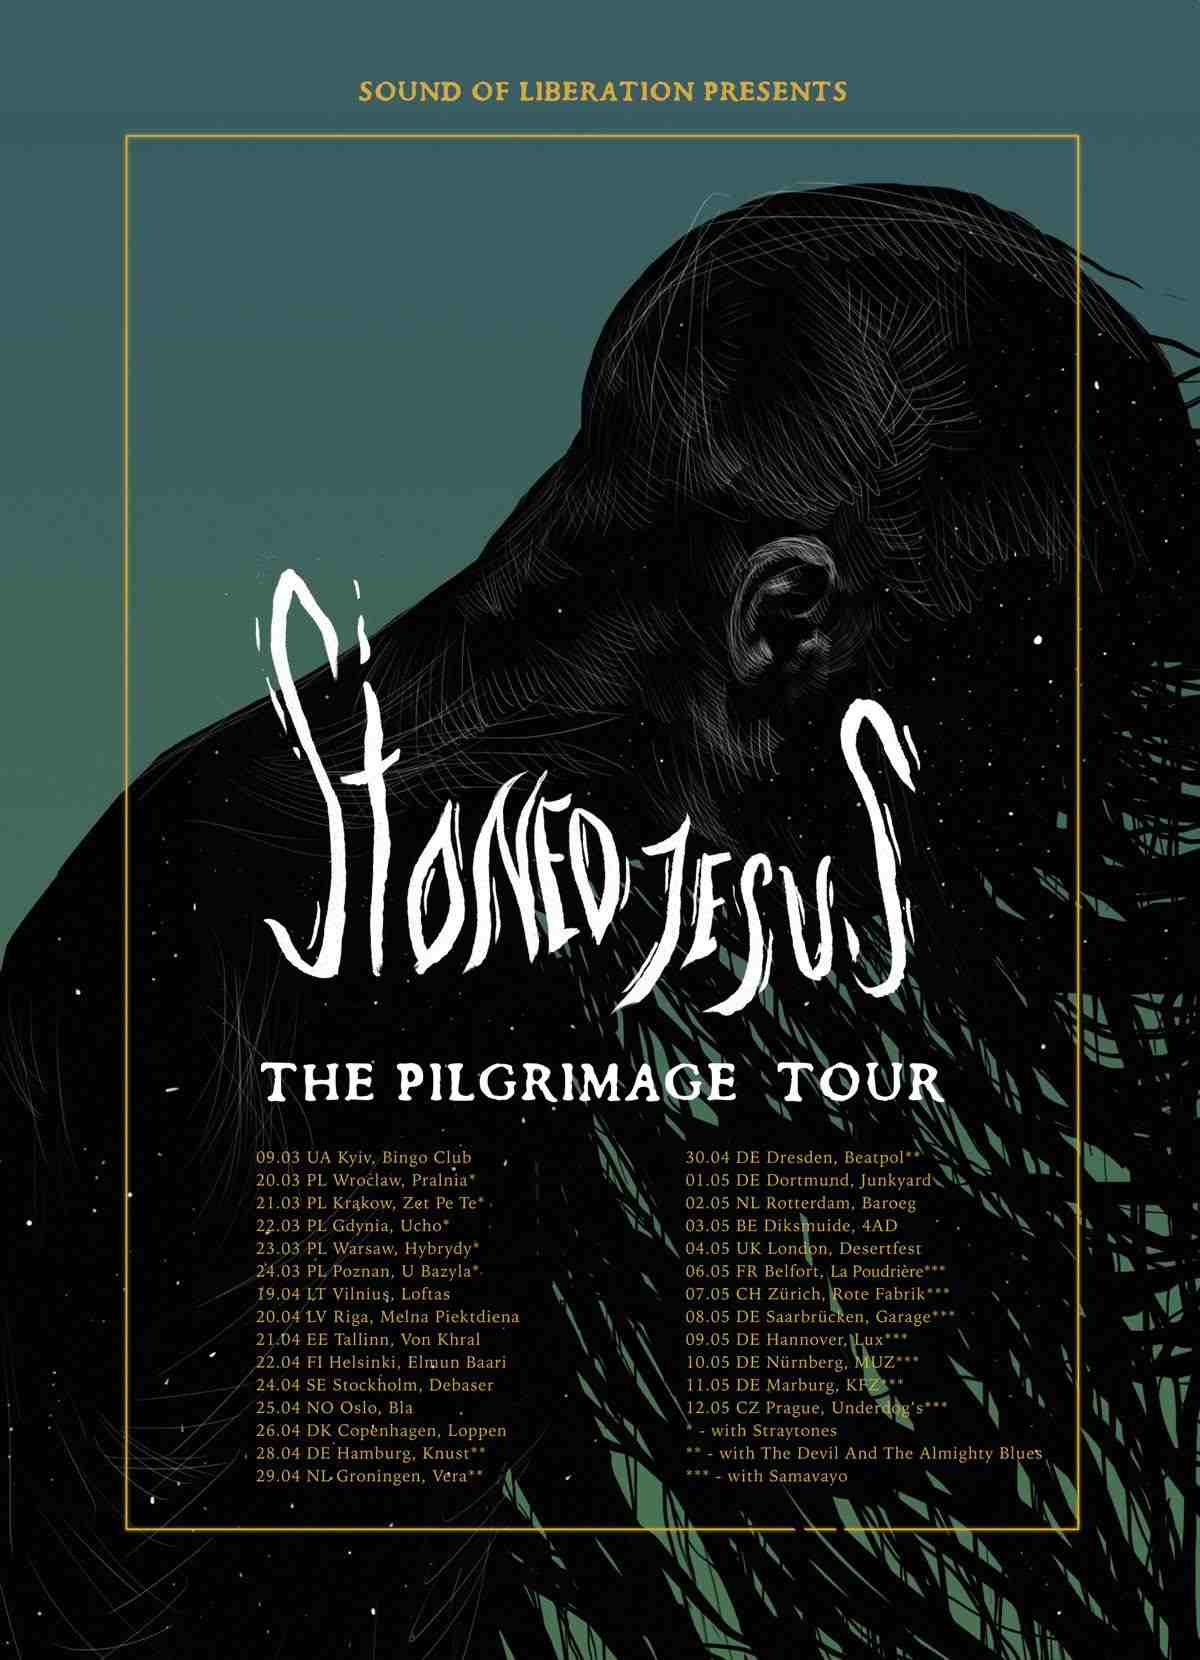 stoned jesus tour